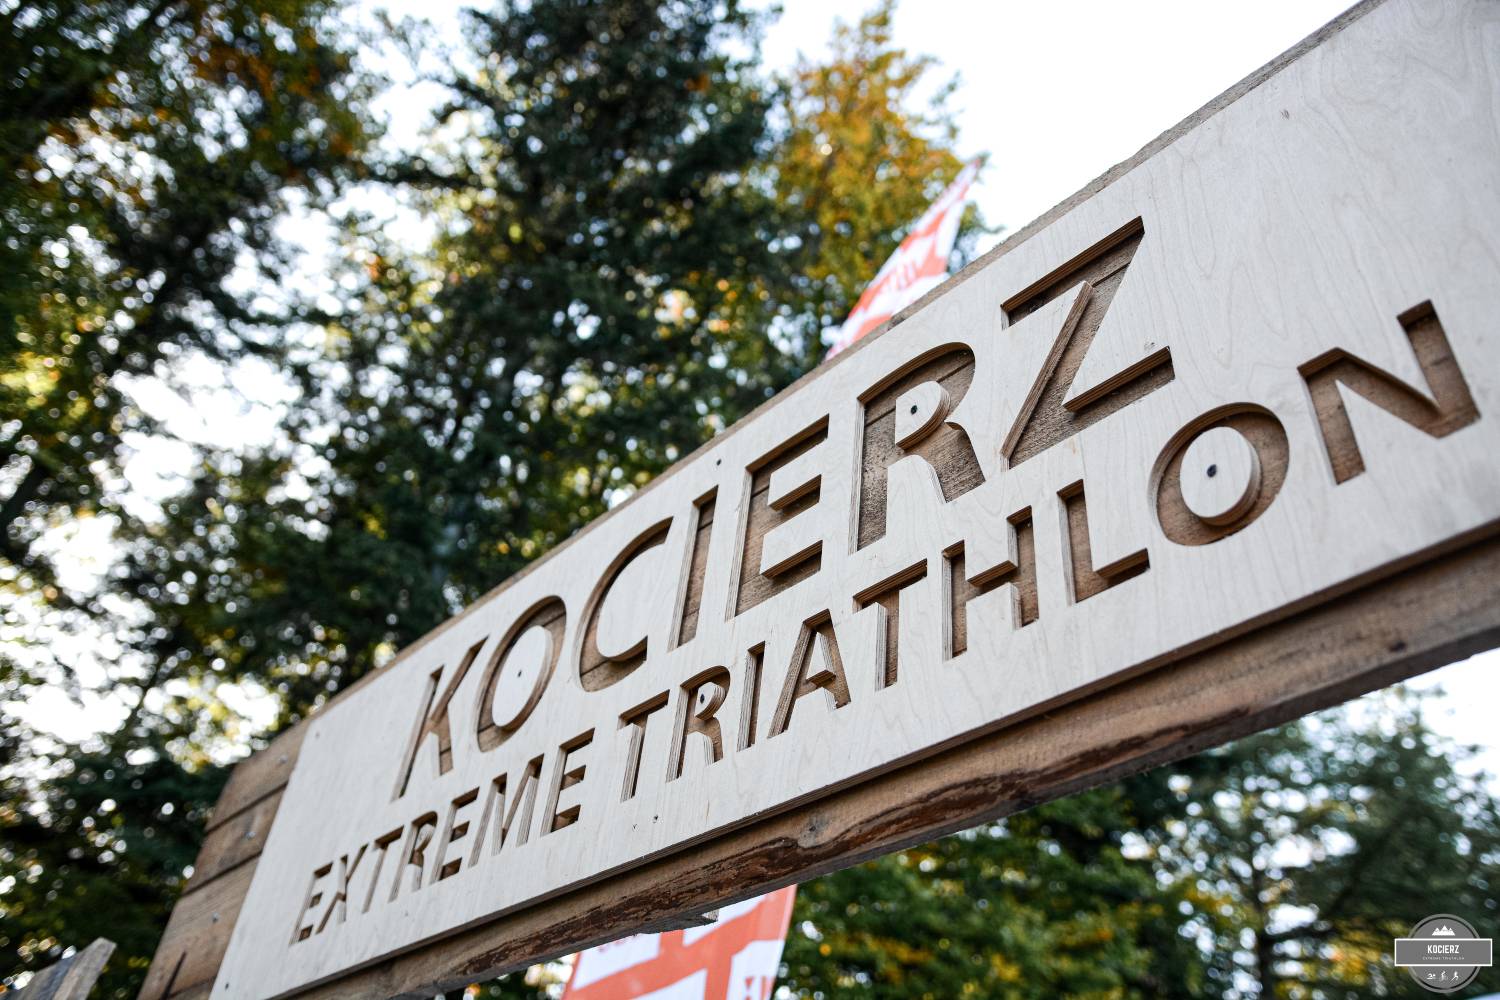 Kocierz Extreme Triathlon 2022